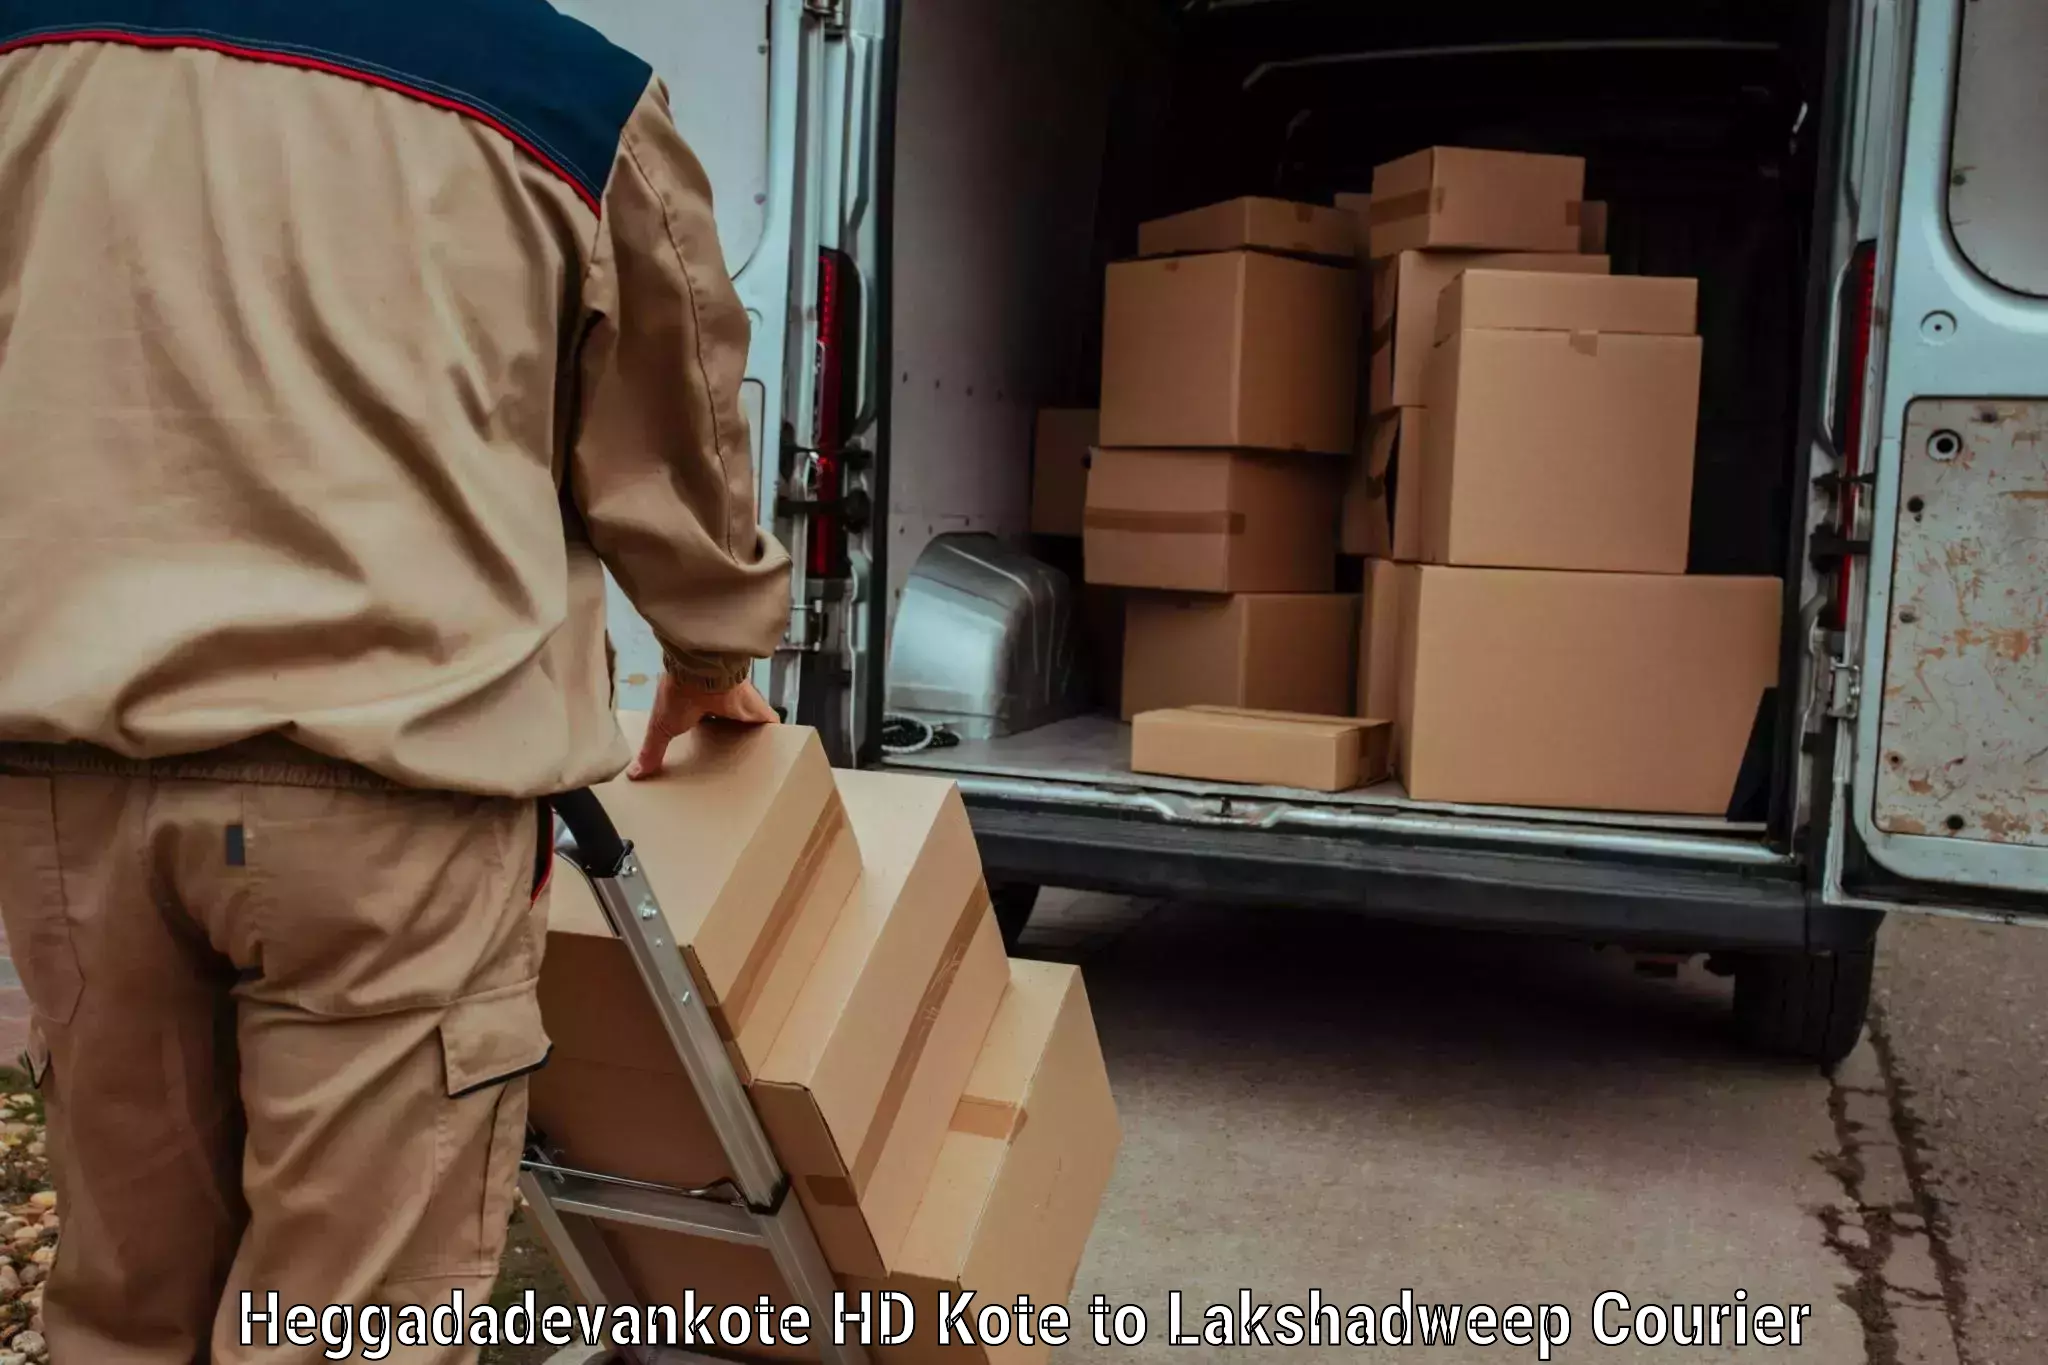 Business luggage transport Heggadadevankote HD Kote to Lakshadweep